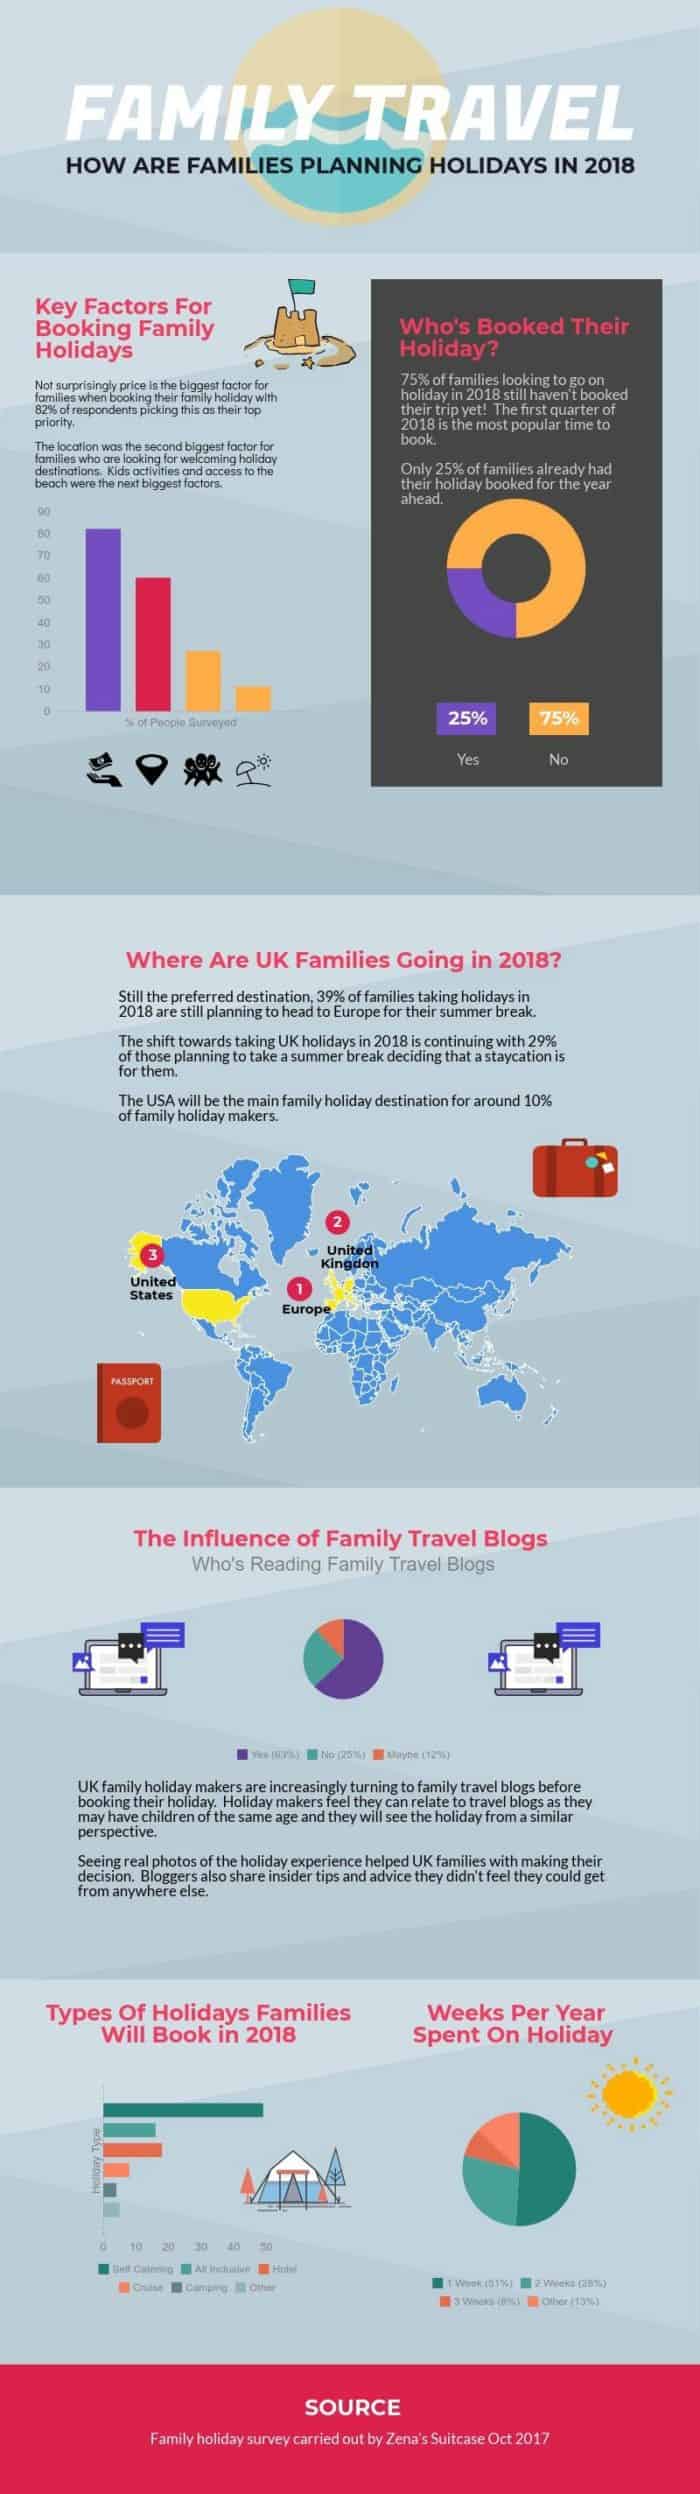 Family Travel Trends 2018